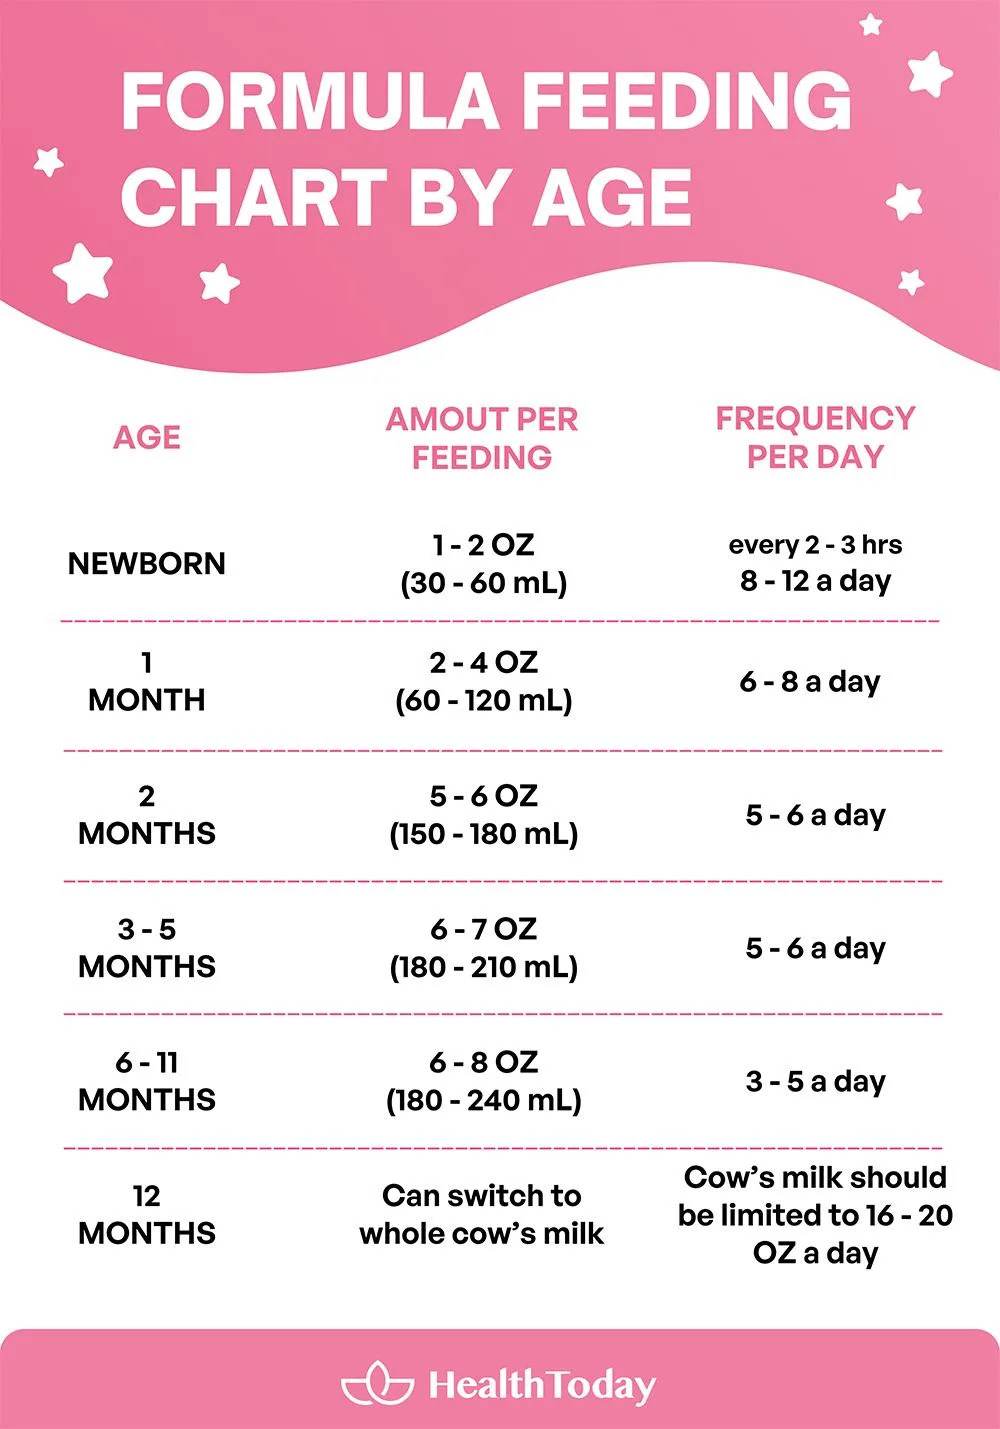 Formula feeding chart by age_healthtoday